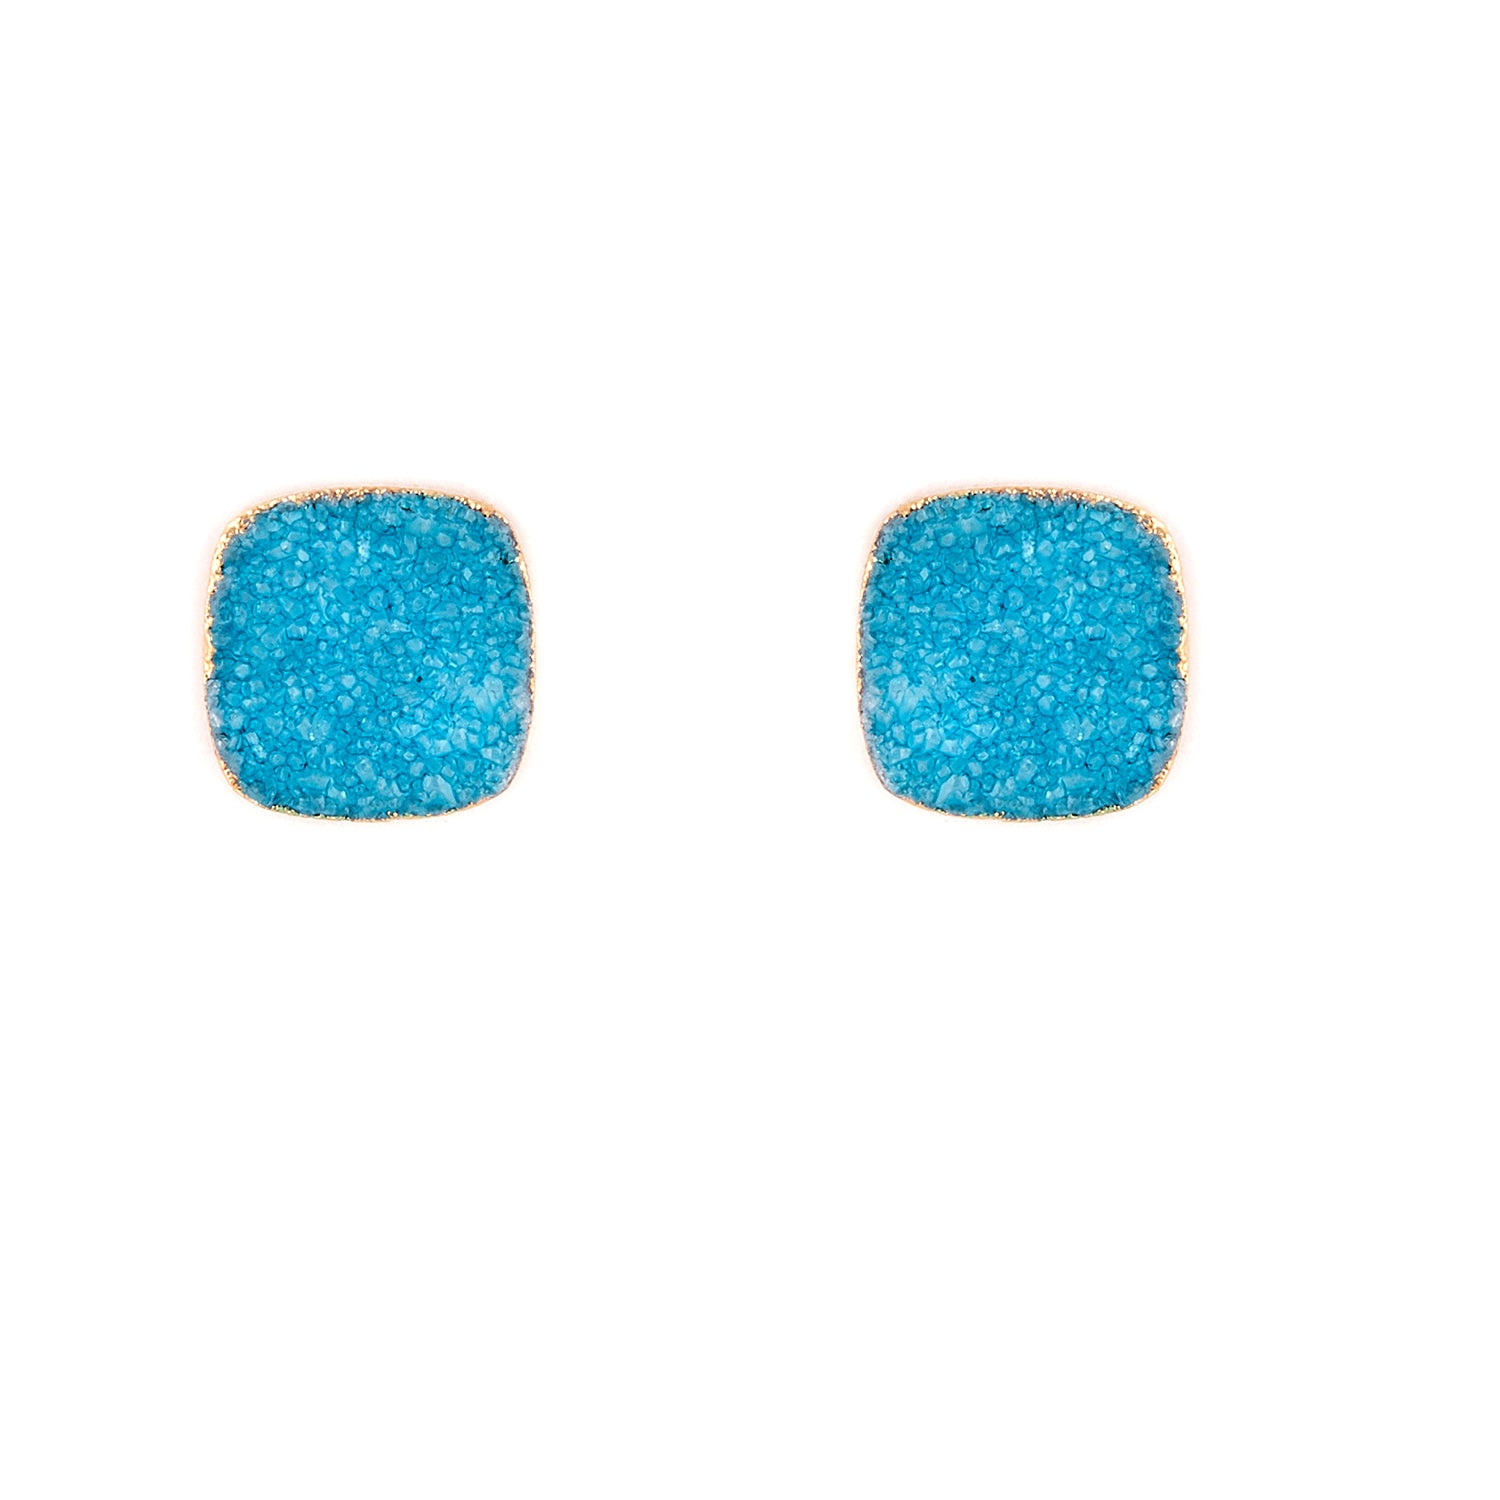 Blue Hydro Stud Earring Earring 13.99 Indigo Paisley